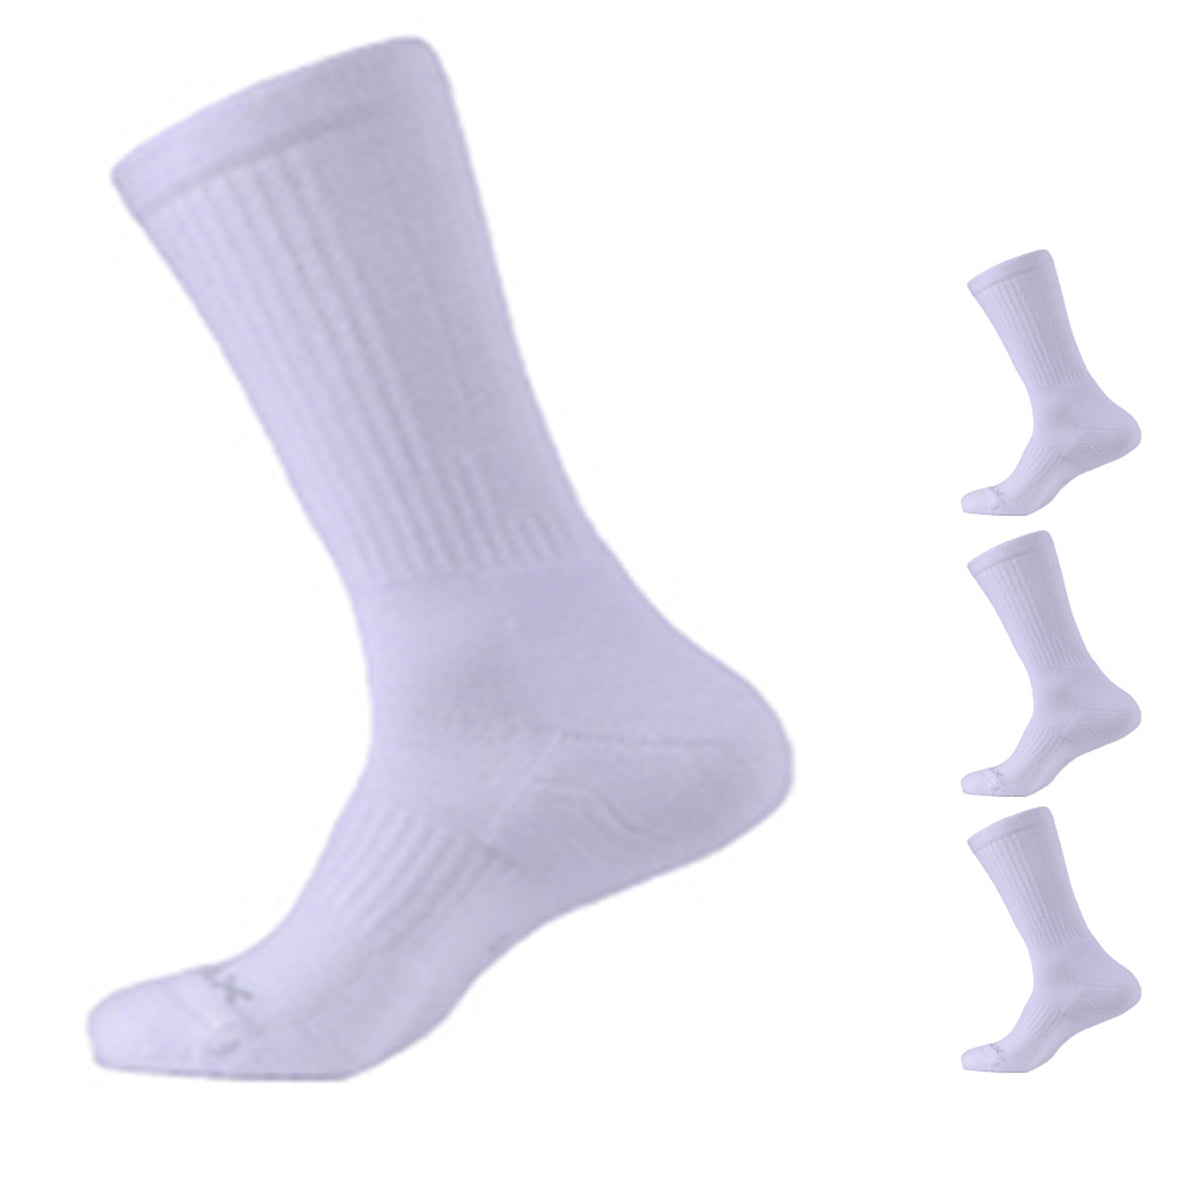 SOLAX 3 pairs Men's Crew Sports Socks